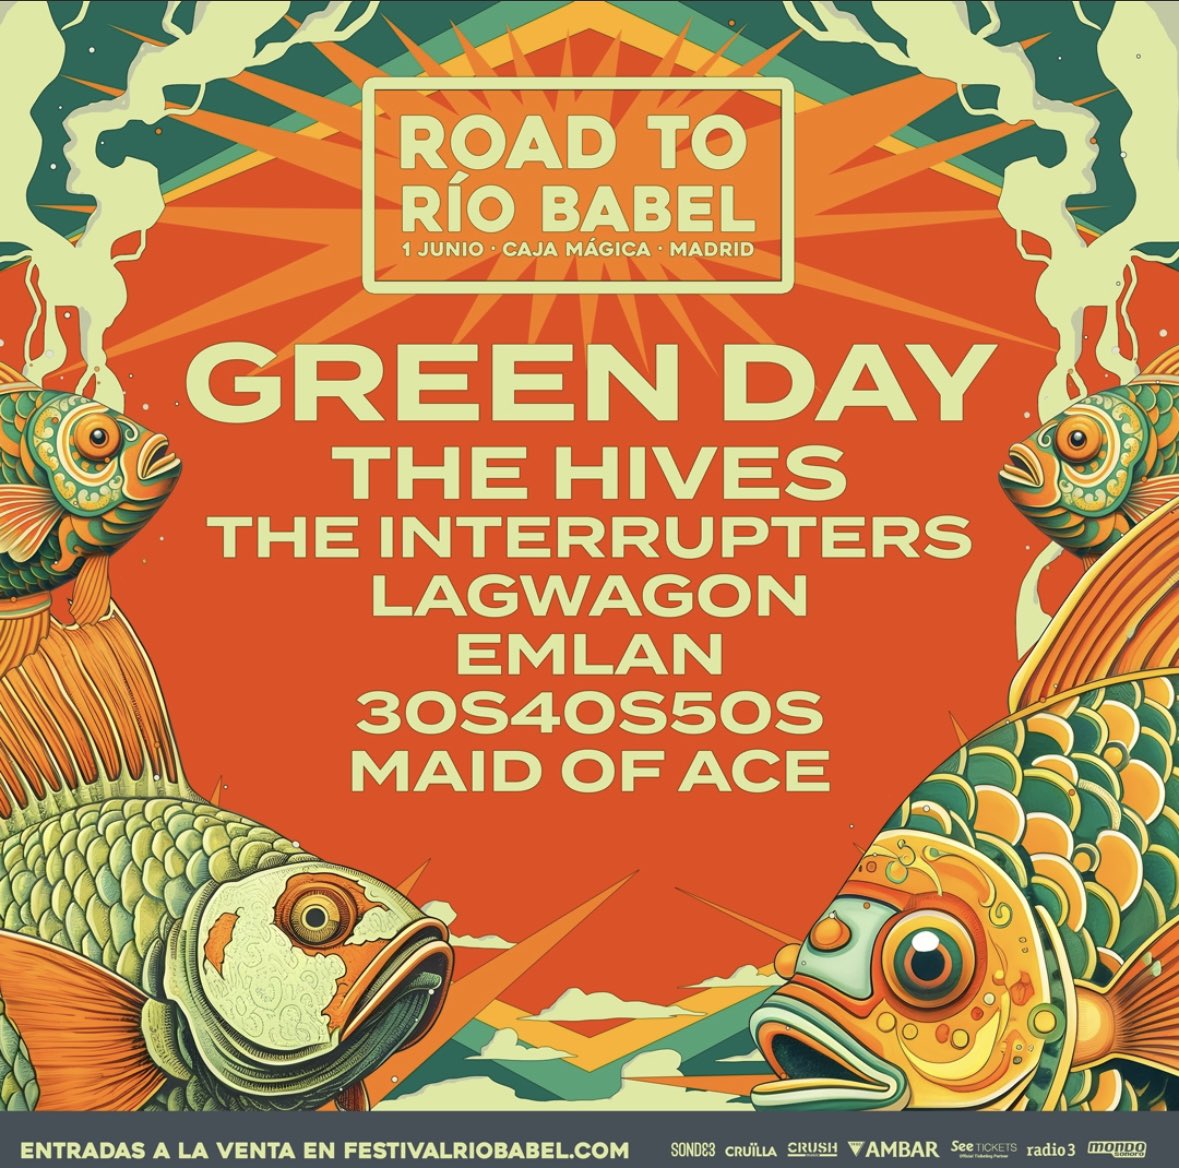 The Hives & The Interrupters acompañarán a Green Day en el Line up del Road to Río Babel 2024.

#FestivalRioBabel
#RioBabel2024